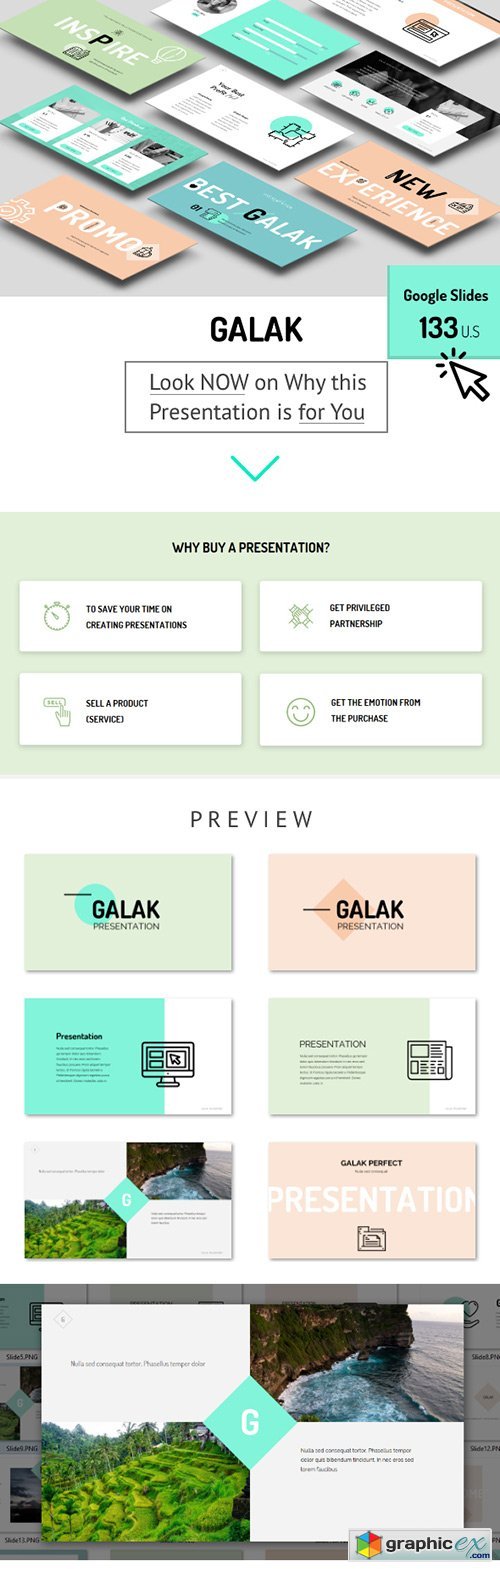 GALAK - Google Slides Presentation Template